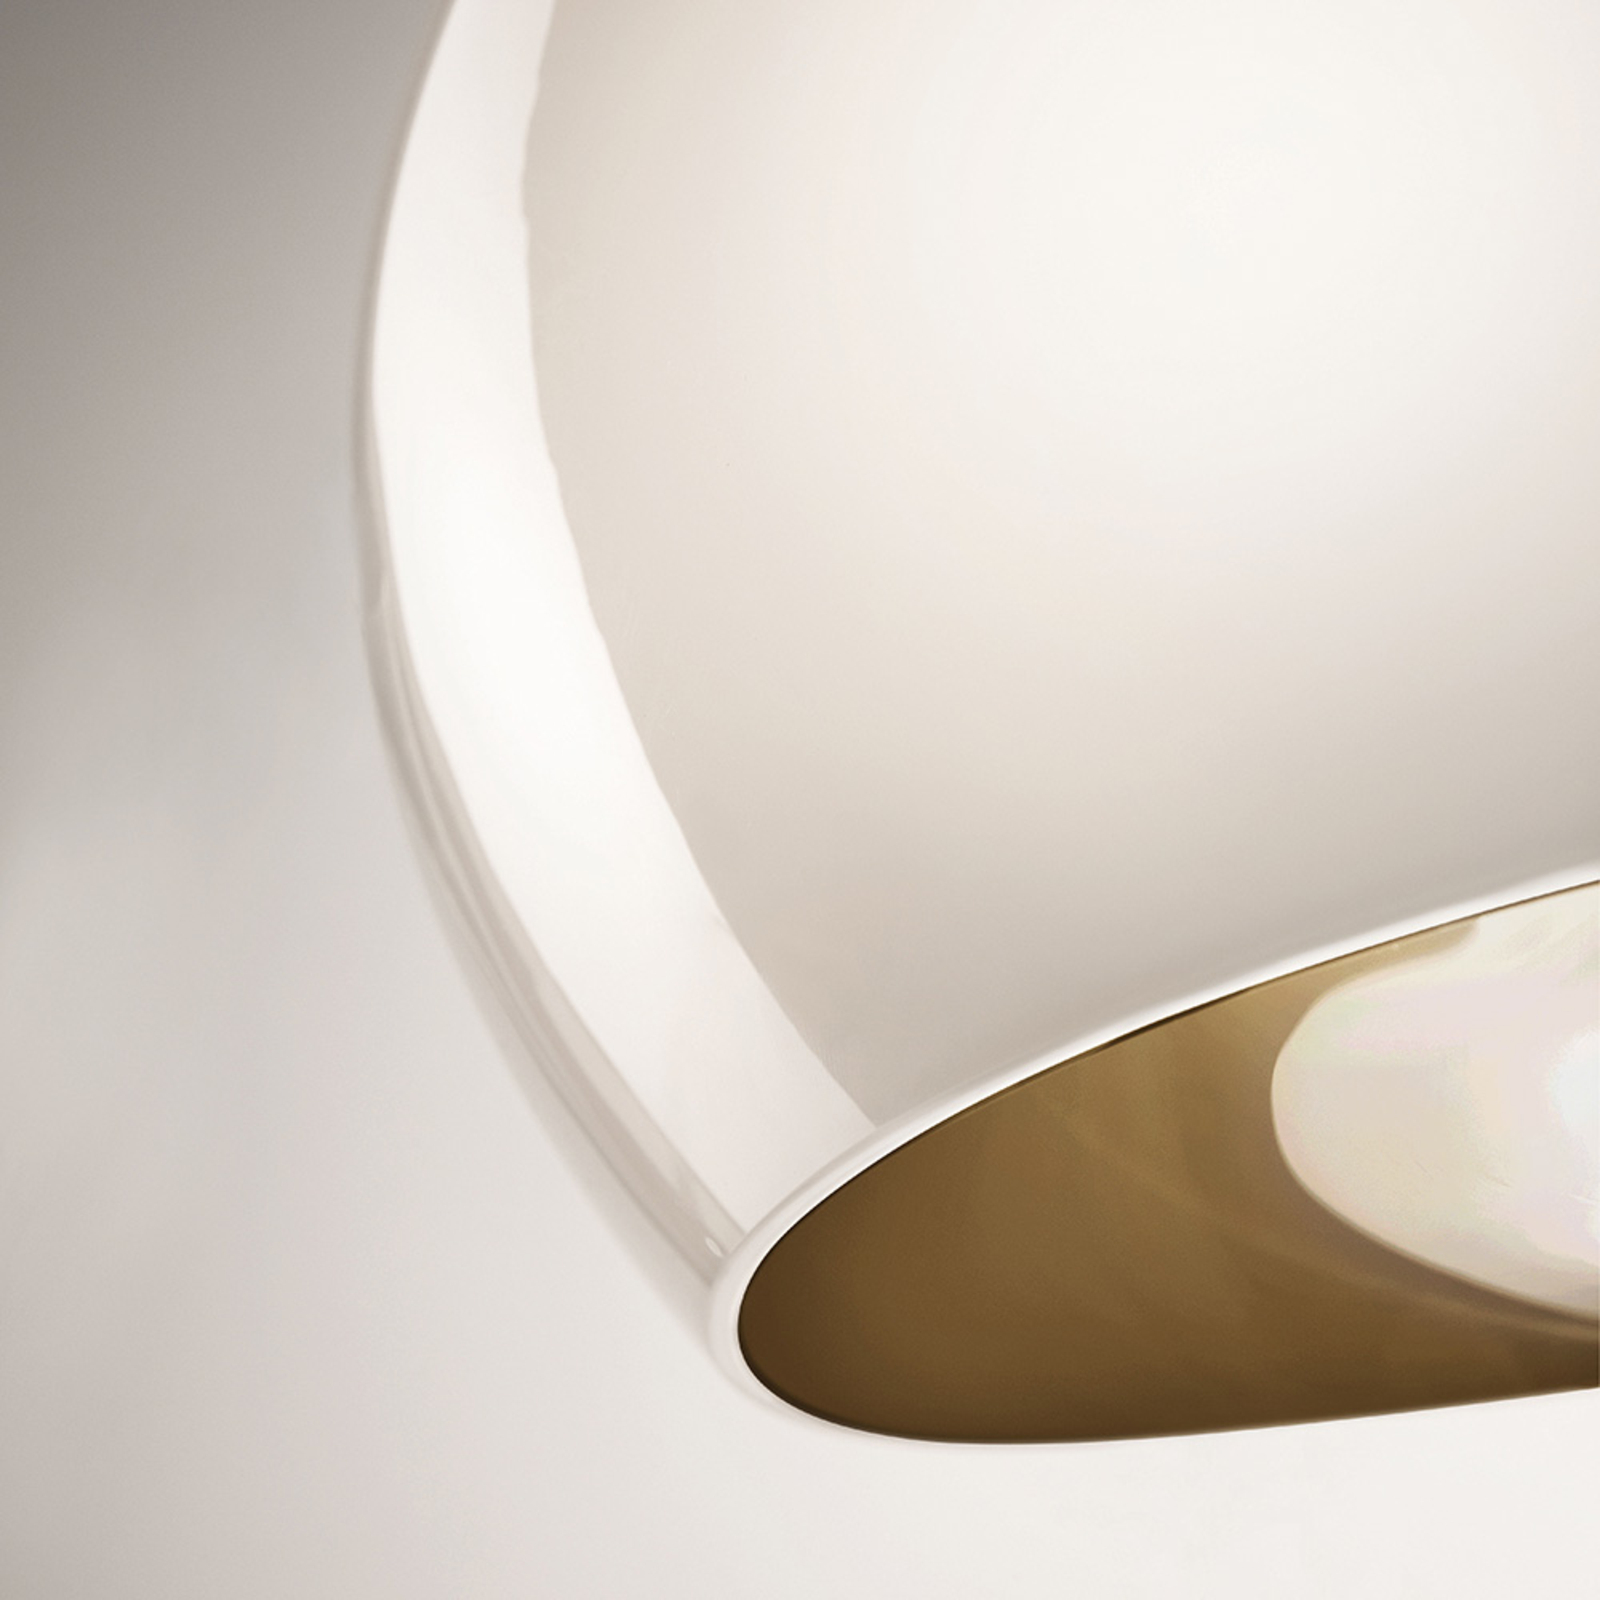 Hanglamp Surface Ø 40 cm, E27 wit/aardbruin